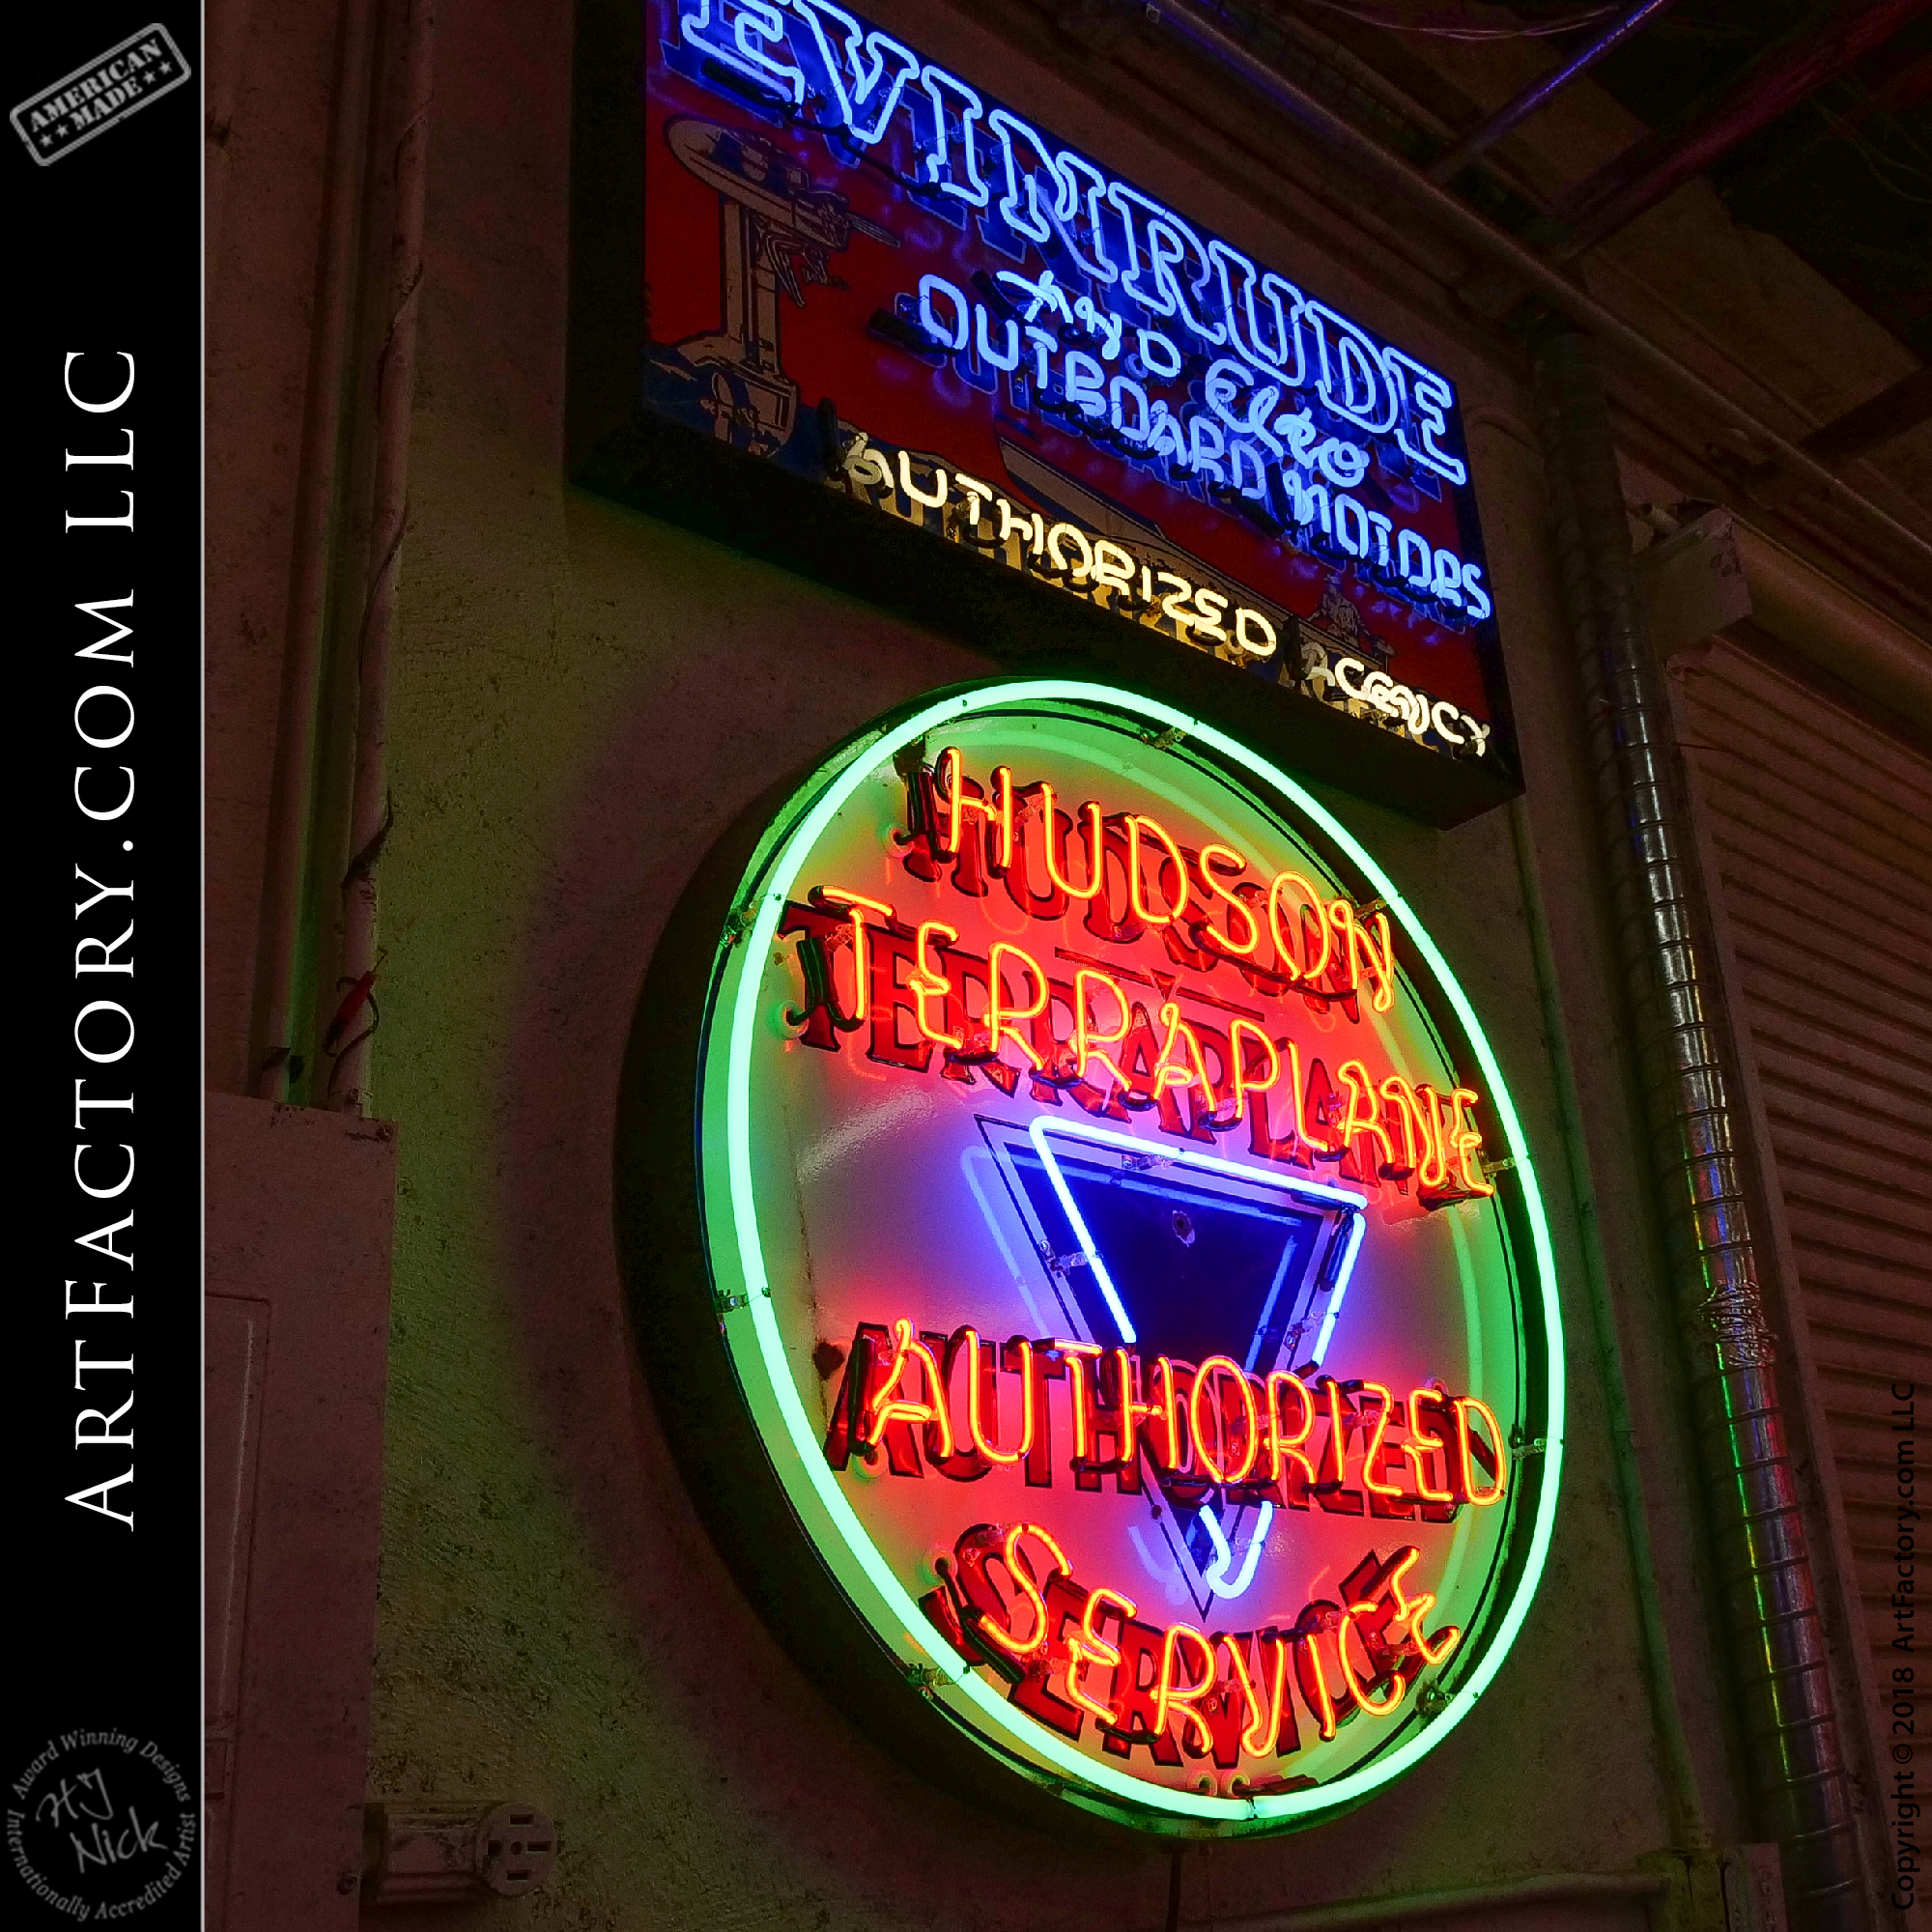 Hudson Terraplane Neon Sign